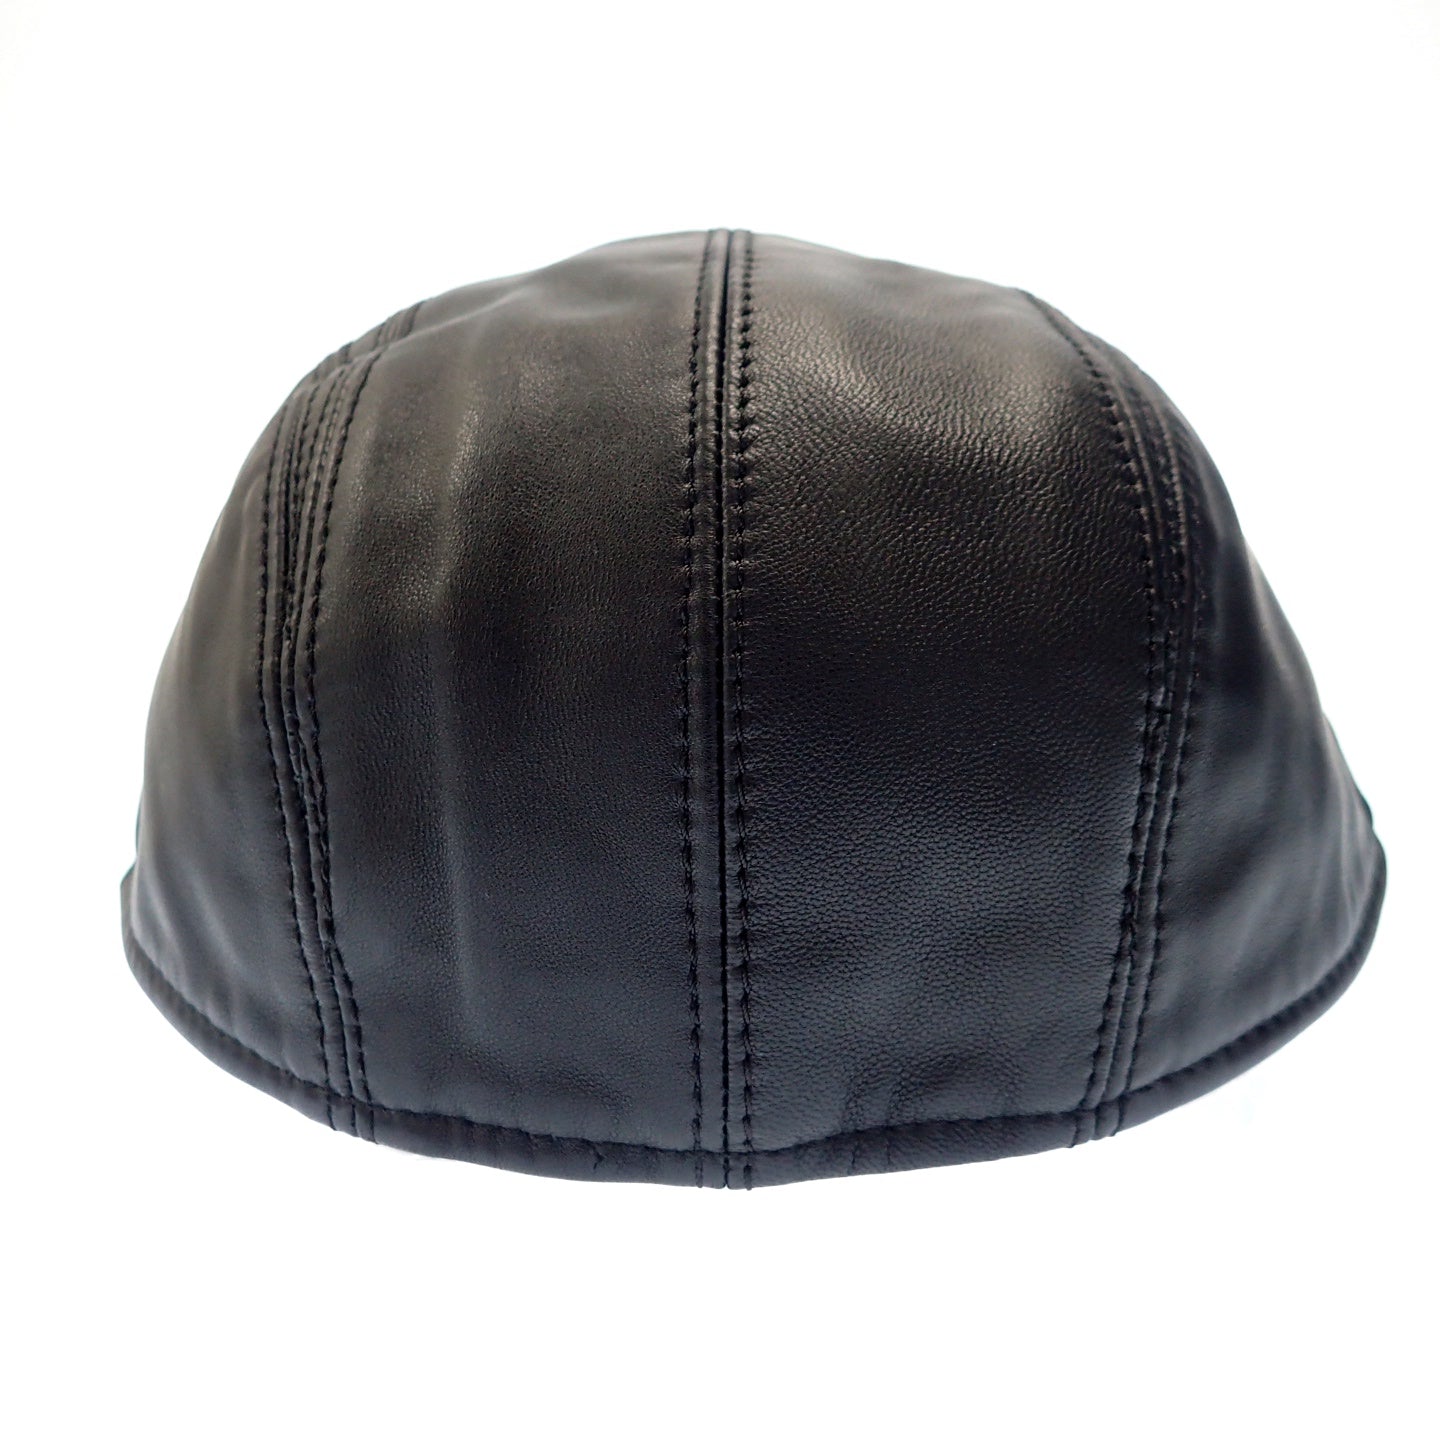 状况非常好 ◆Borsalino 帽子 羔羊皮 黑色 尺寸 60 Borsalino [AFI21] 